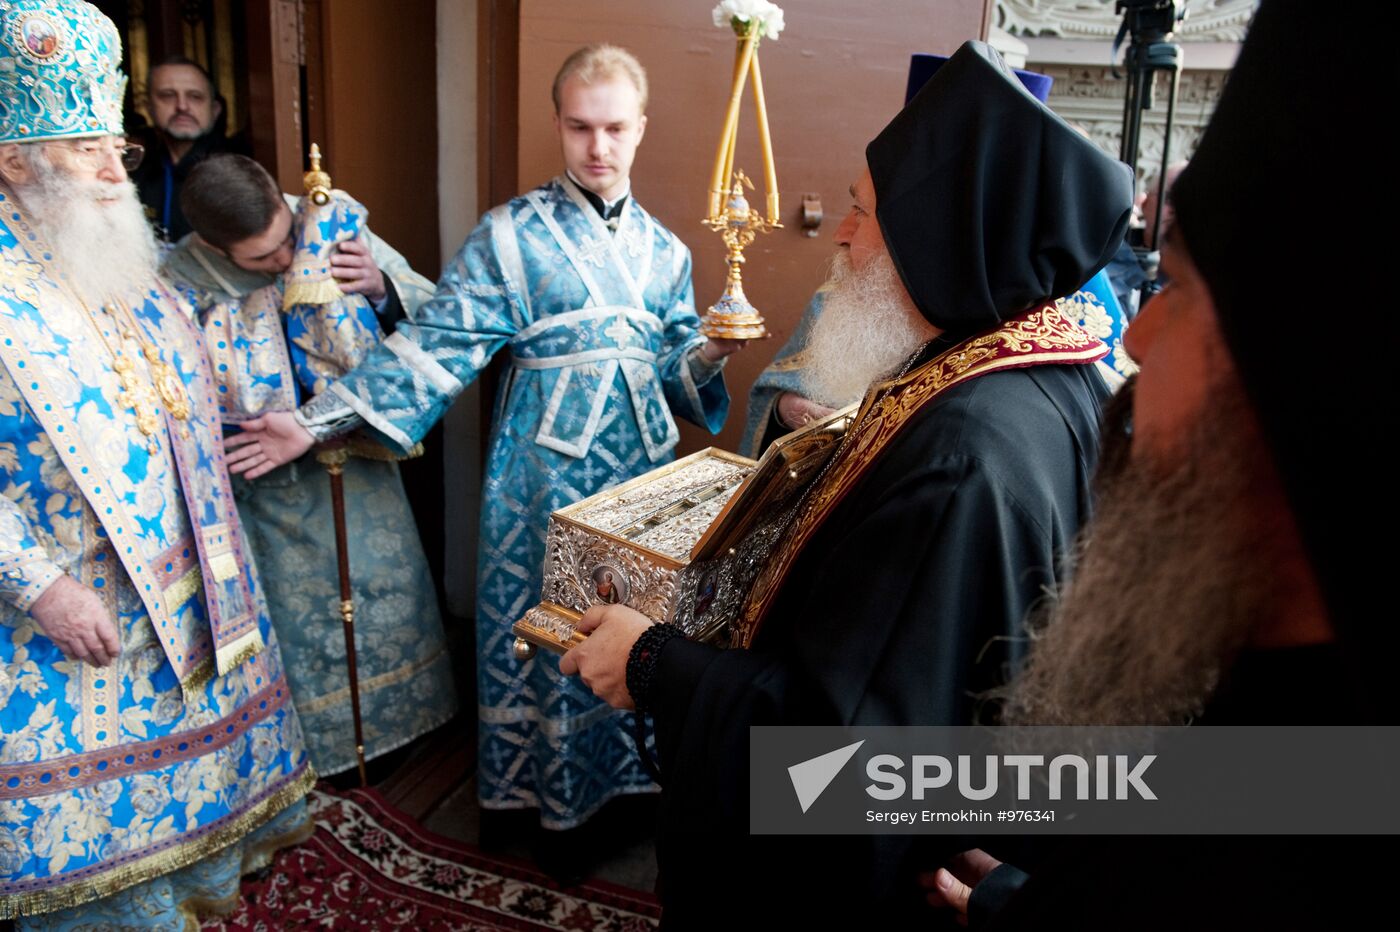 Sash of the Blessed Virgin arrives in St. Petersburg